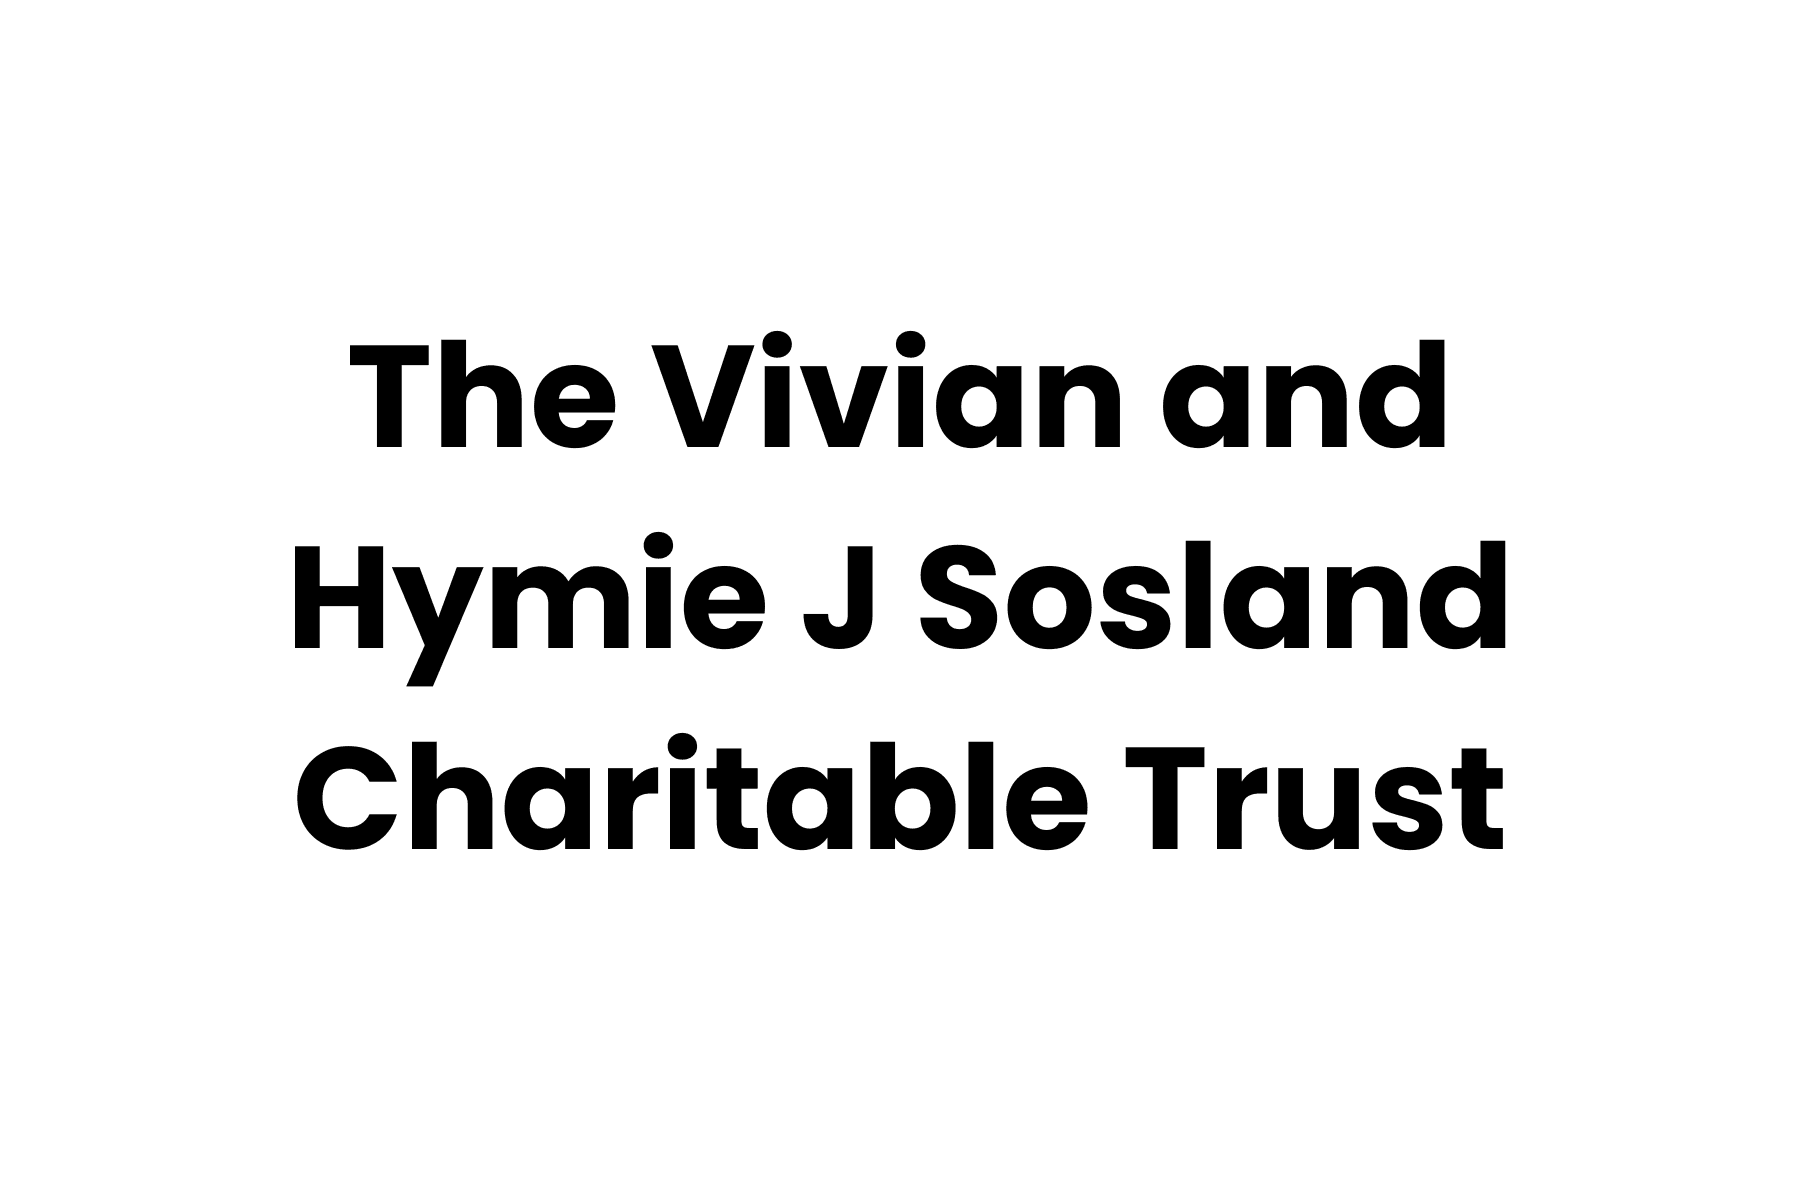 The Vivian and Hymie J Sosland Charitable Trust